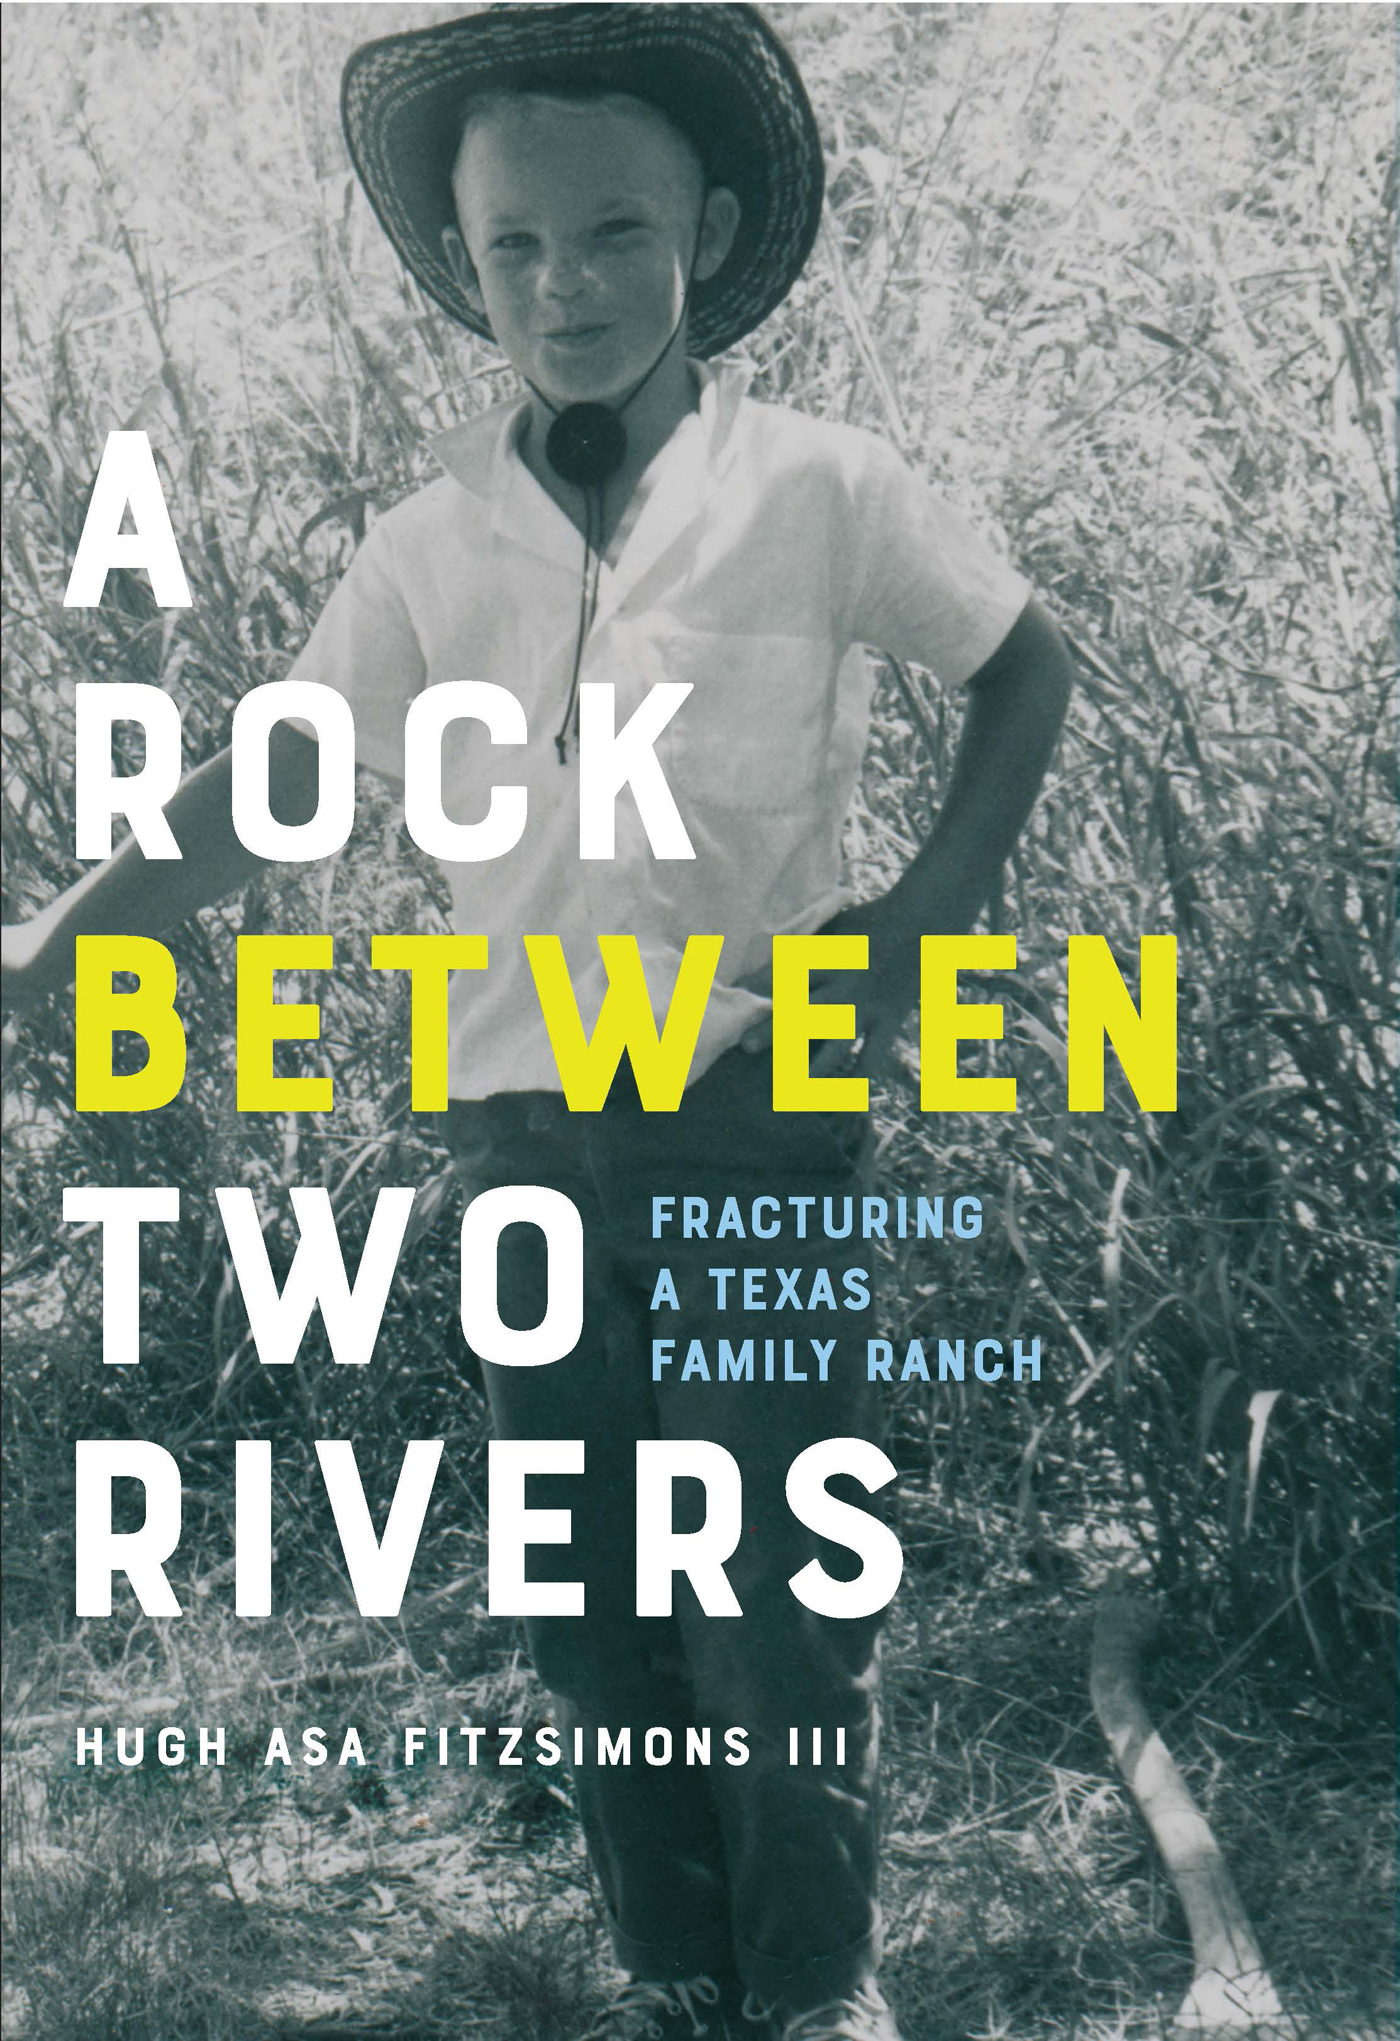 A Rock between Two Rivers Fracturing a Texas Family Ranch HUGH ASA FITZSIMONS - photo 1